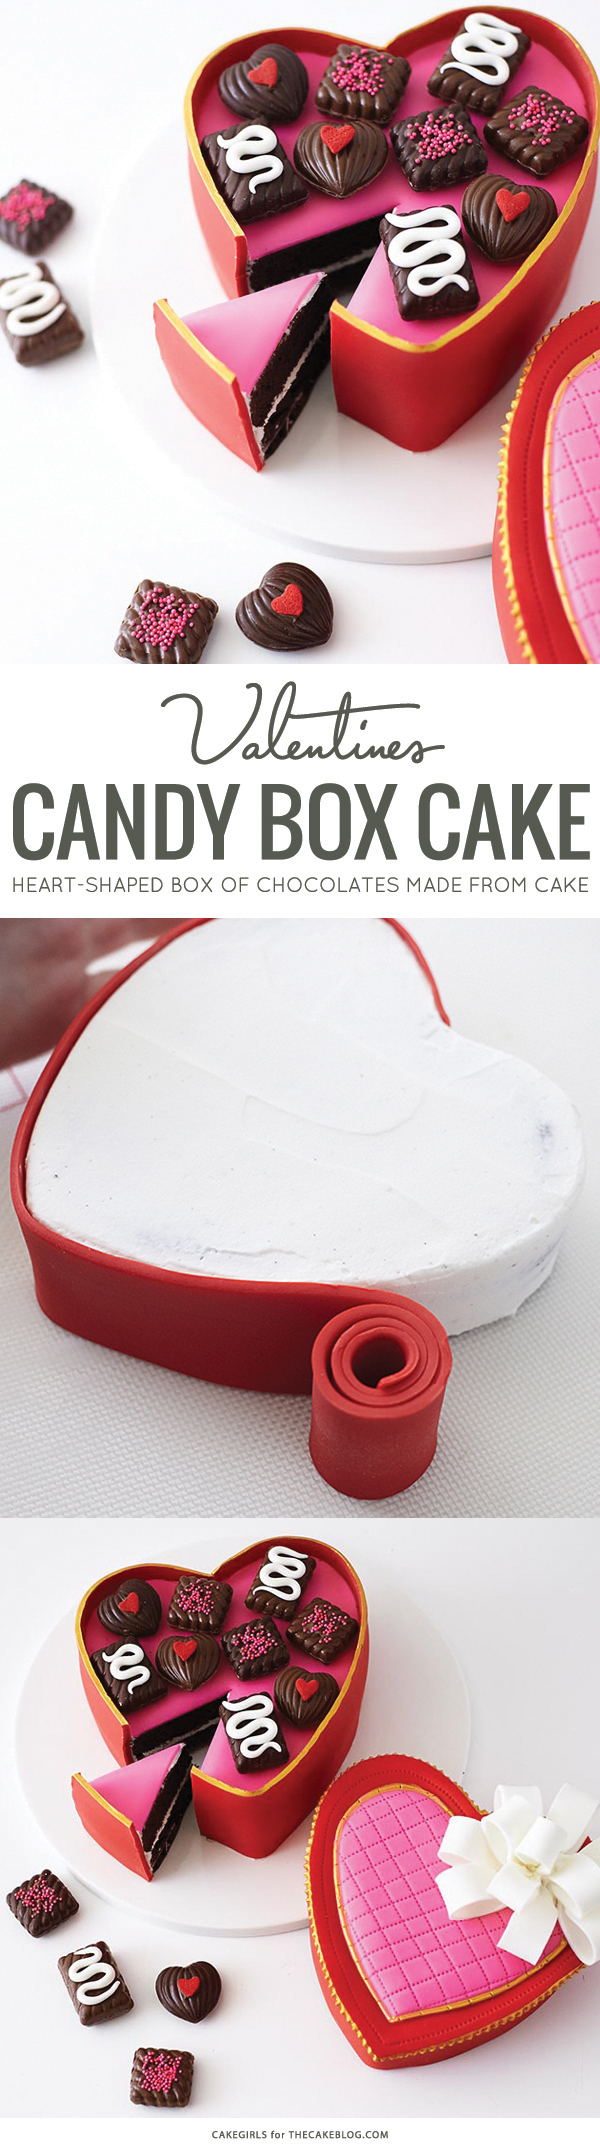 How to make a Valentine's Heart Candy Box Cake | by Cakegirls for TheCakeBlog.com